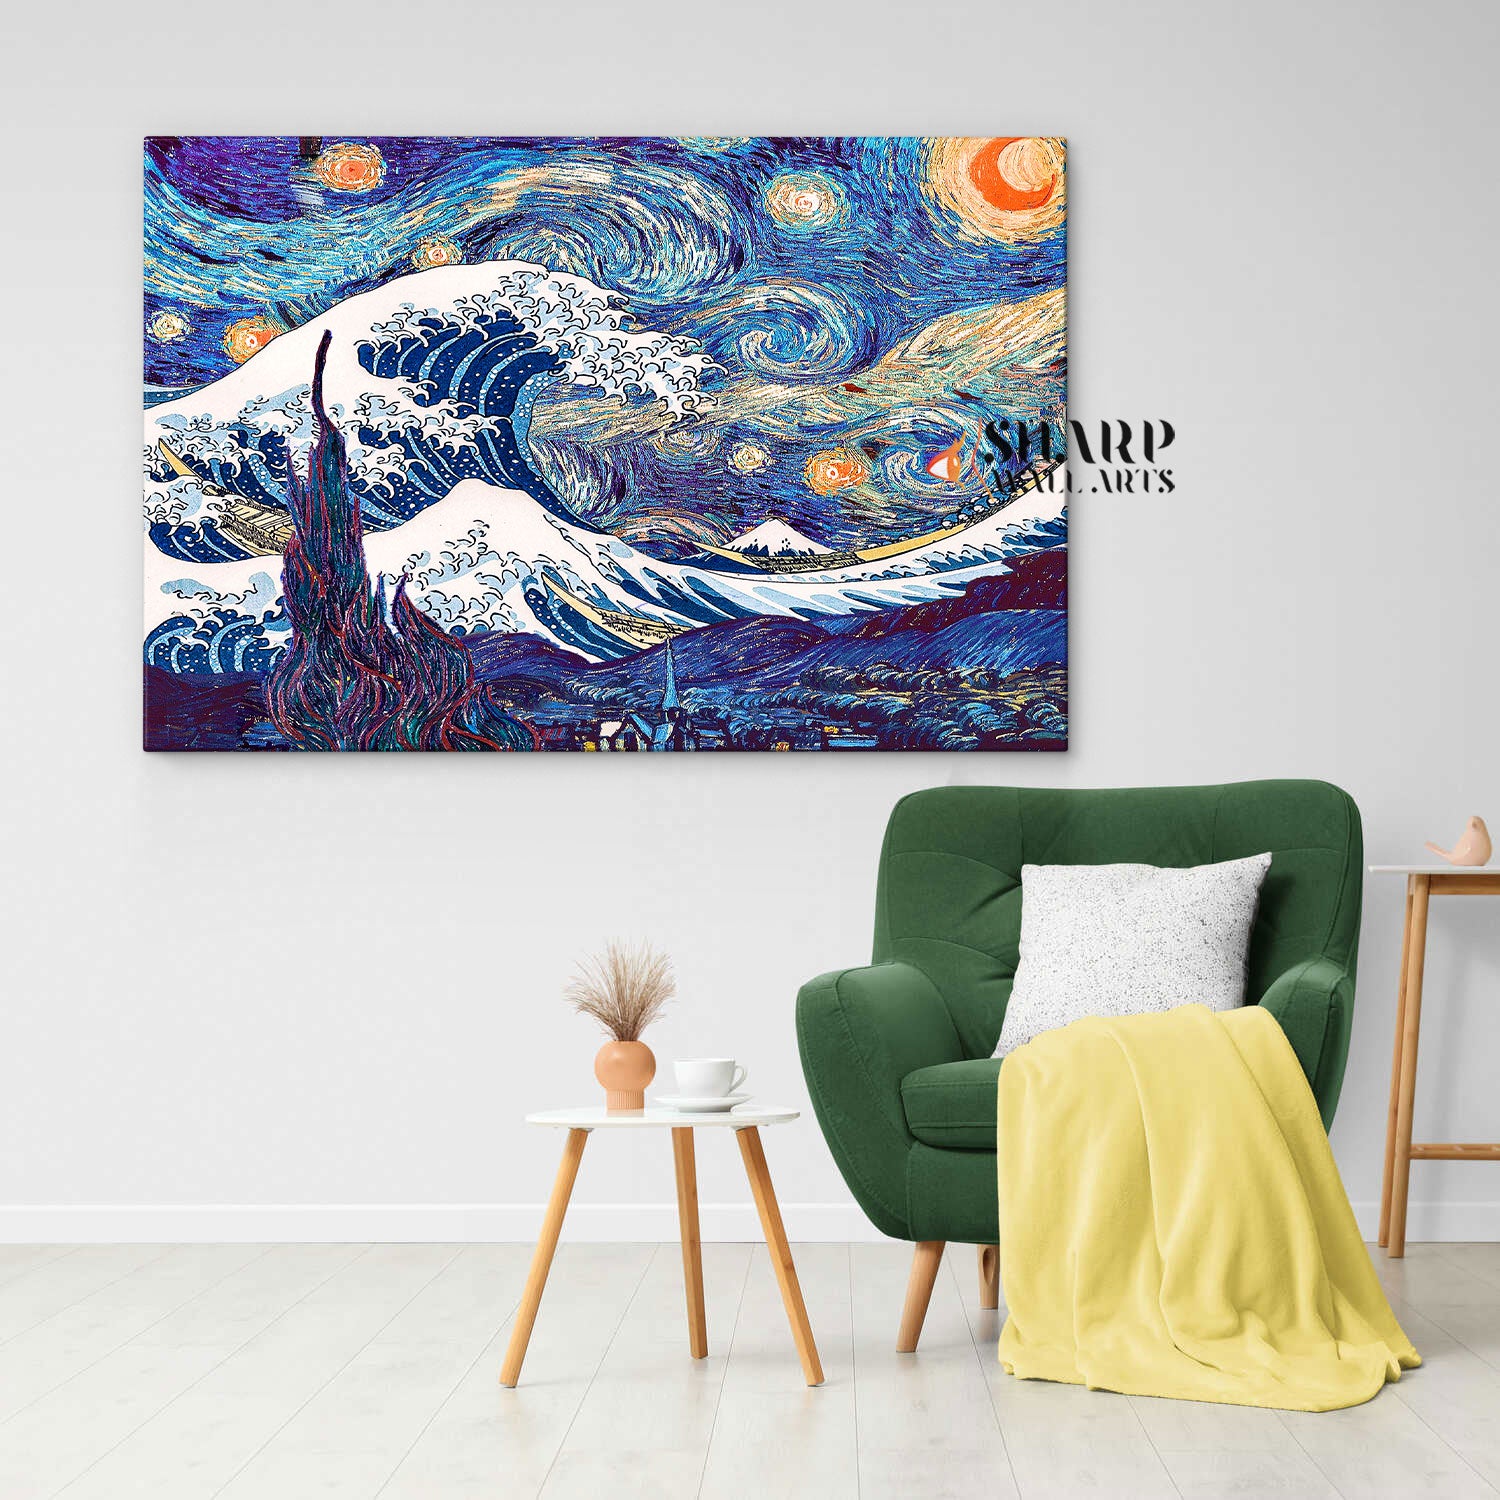 Van Gogh Starry Night And Great Wave Of Kanagawa Canvas Wall Art